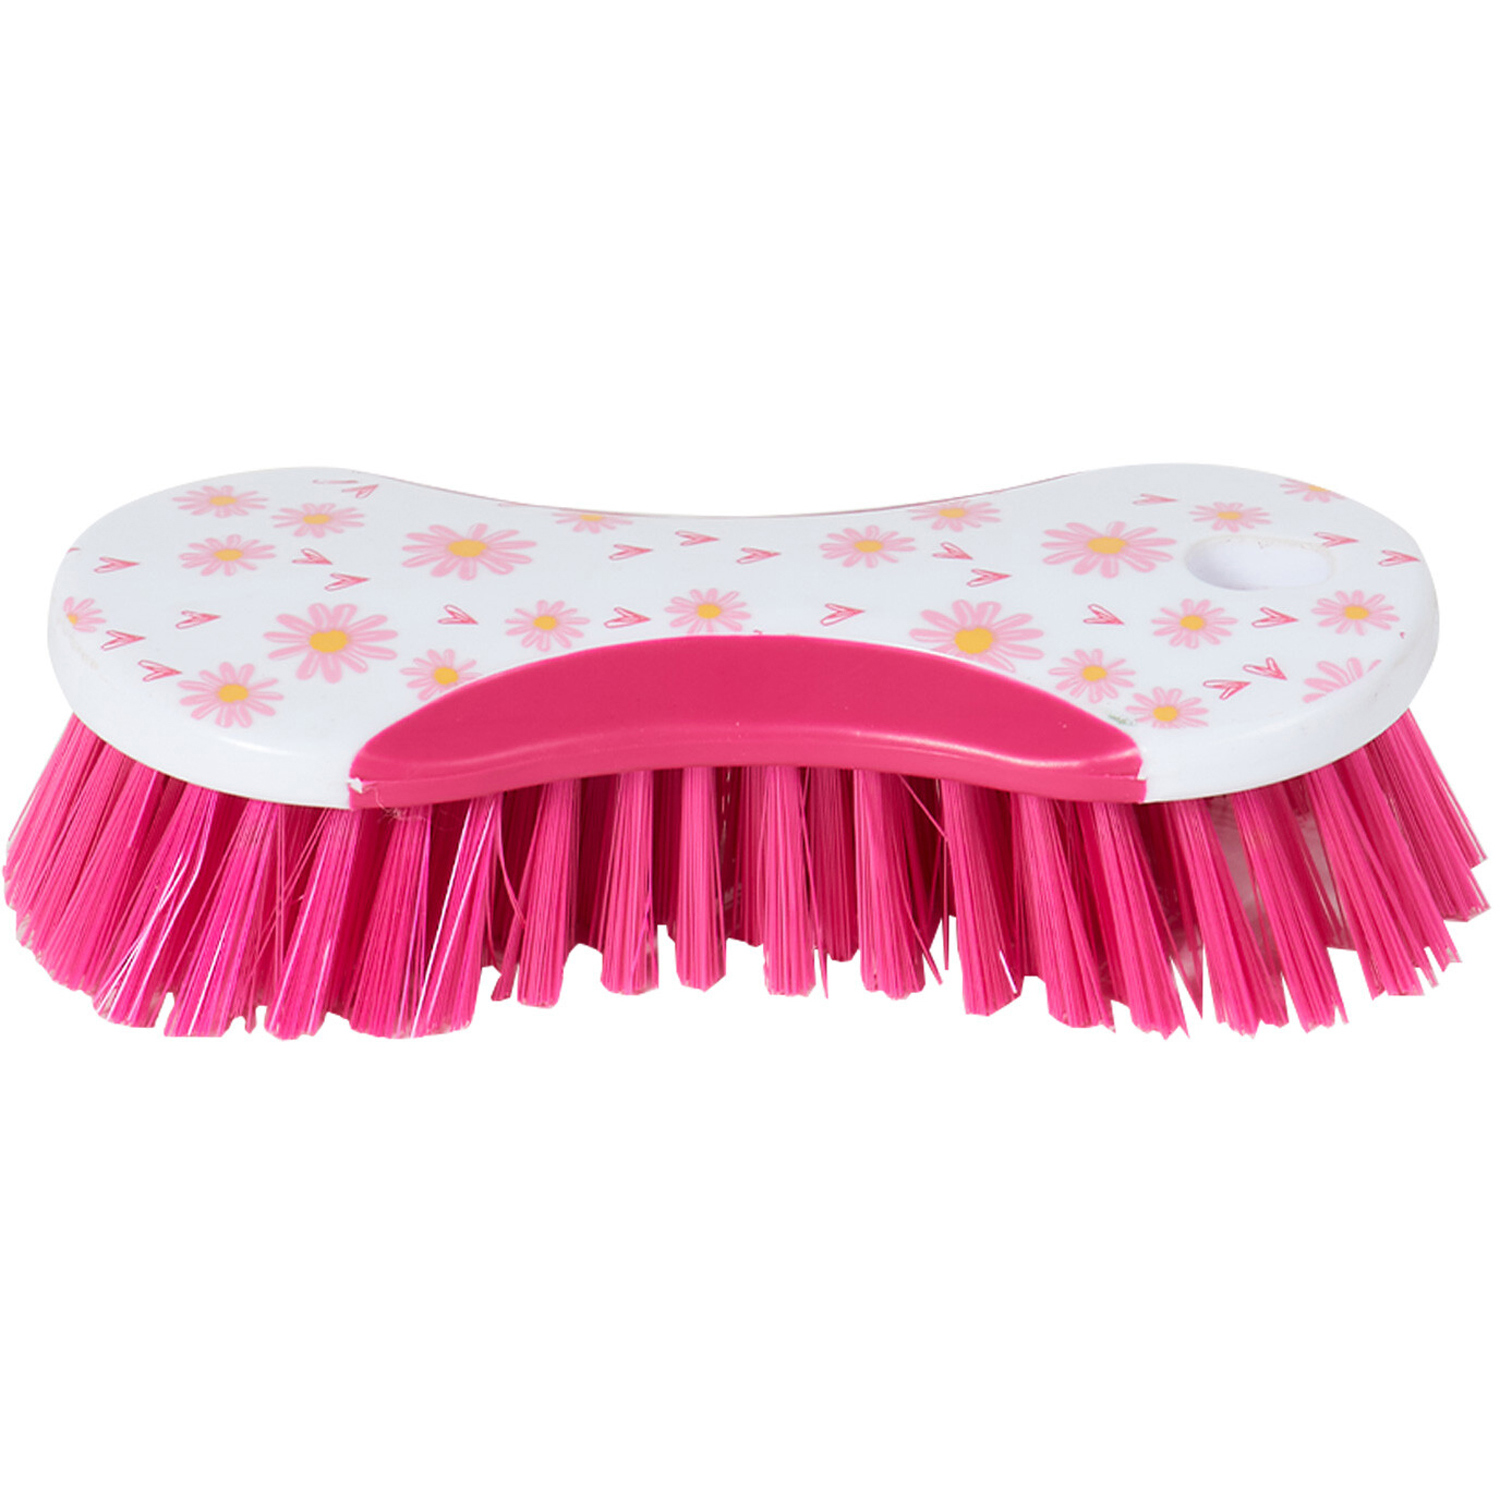 Daisy Pink Scrubbing Brush Image 1